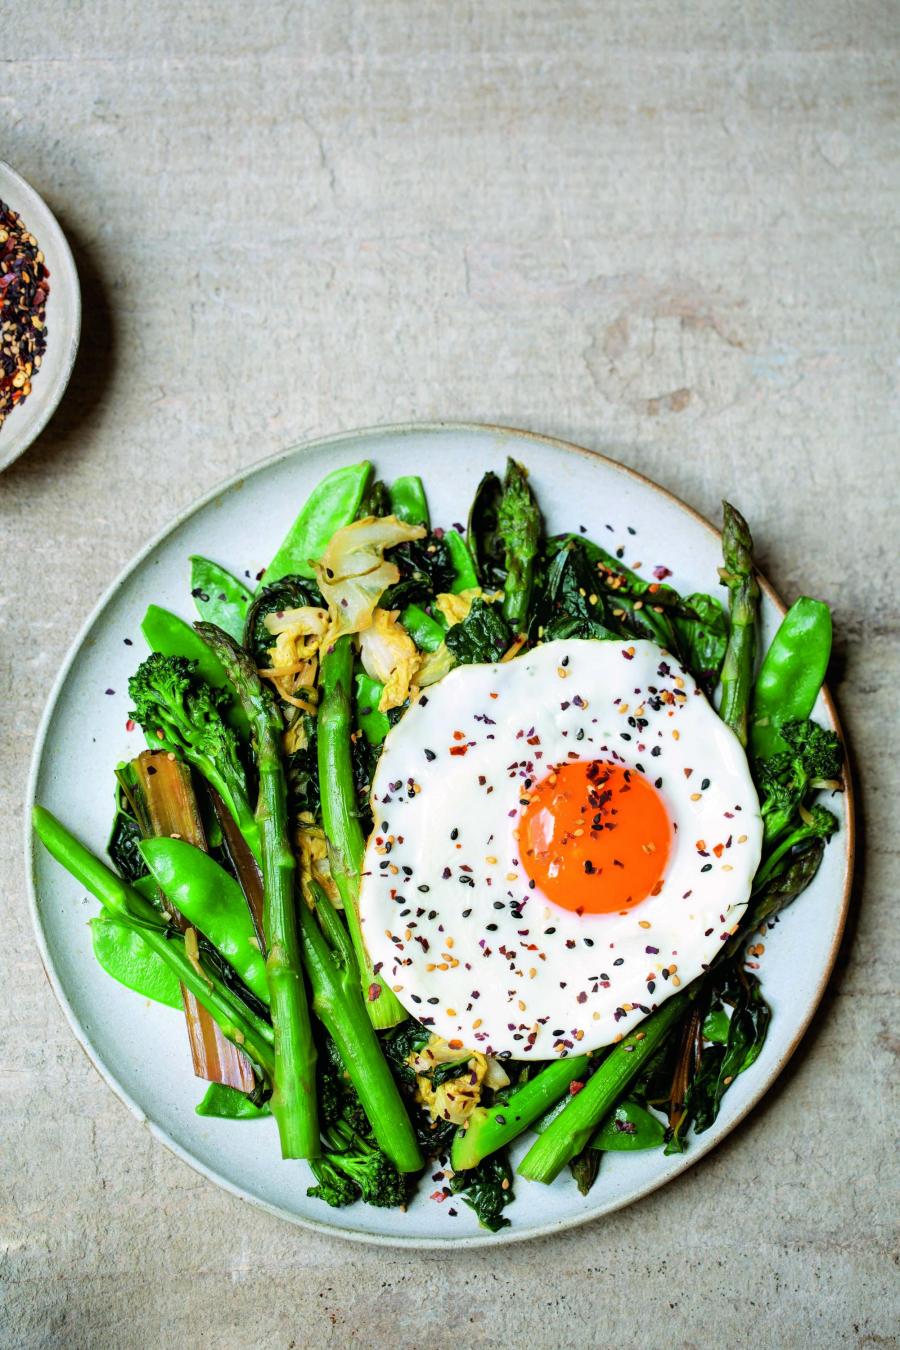 Tom Kerridge's miso stir fry with greens | lady.co.uk